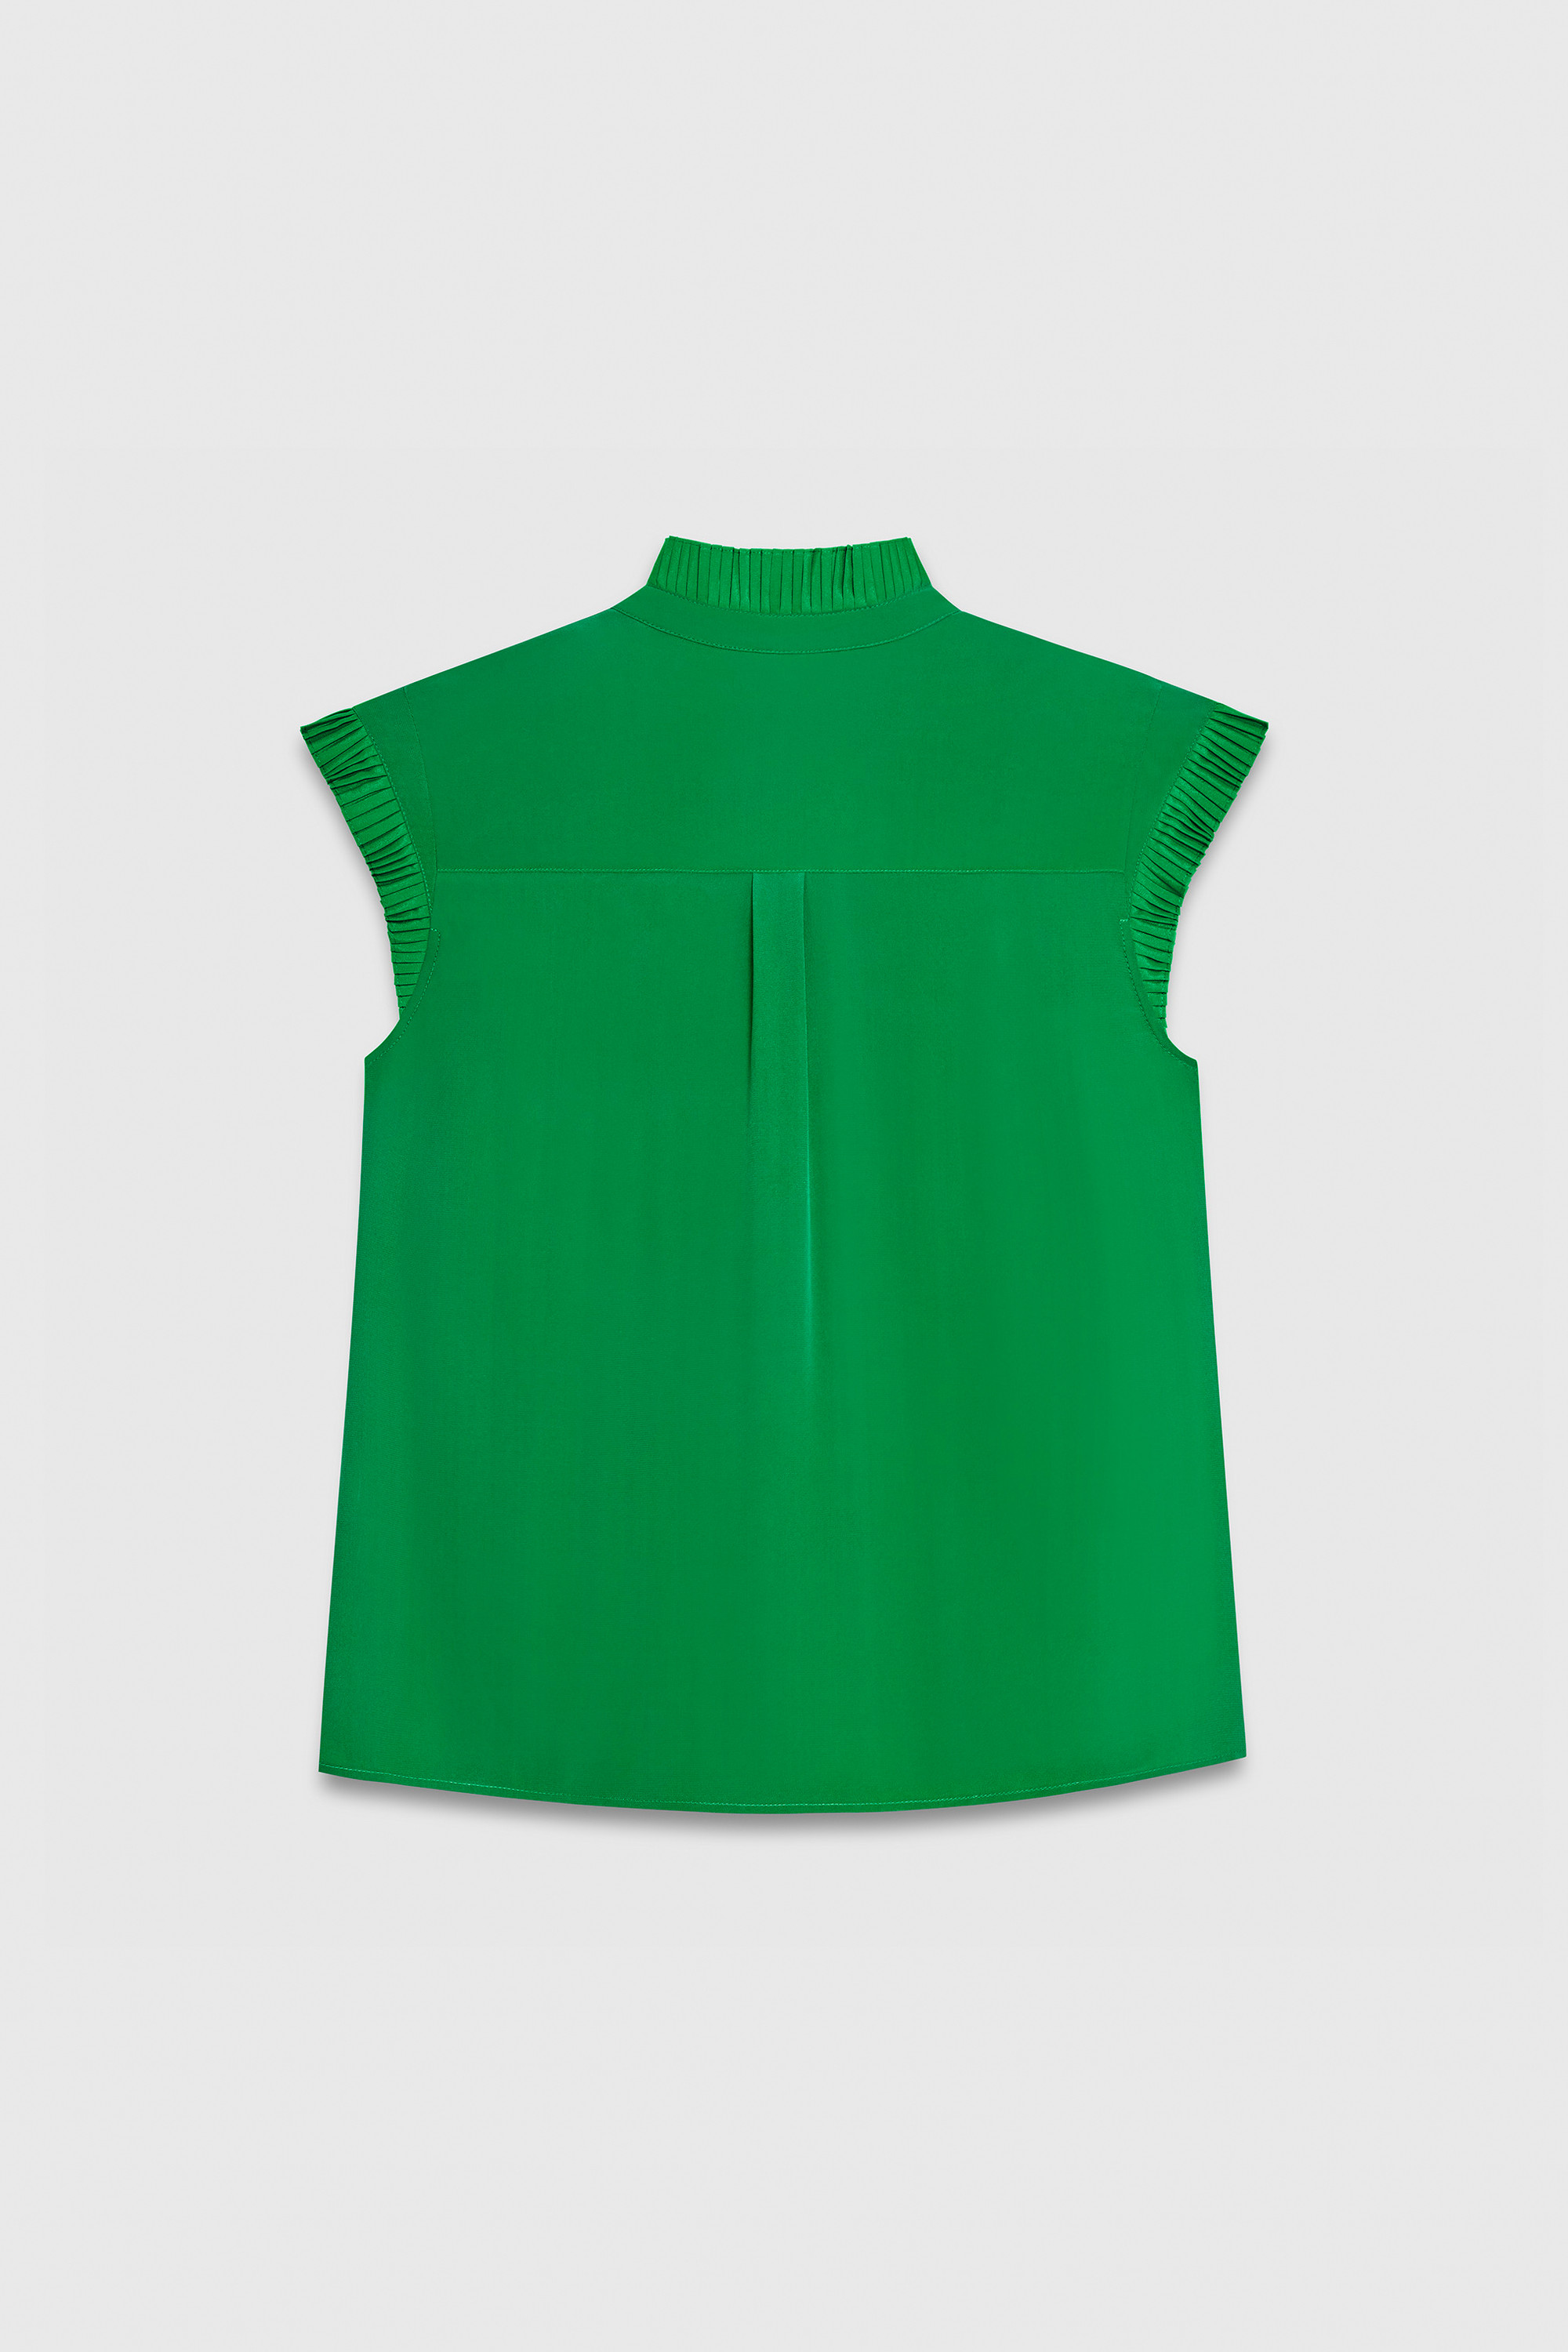 mossimo blouse sleeveless shirt green embowered sheer southwestern